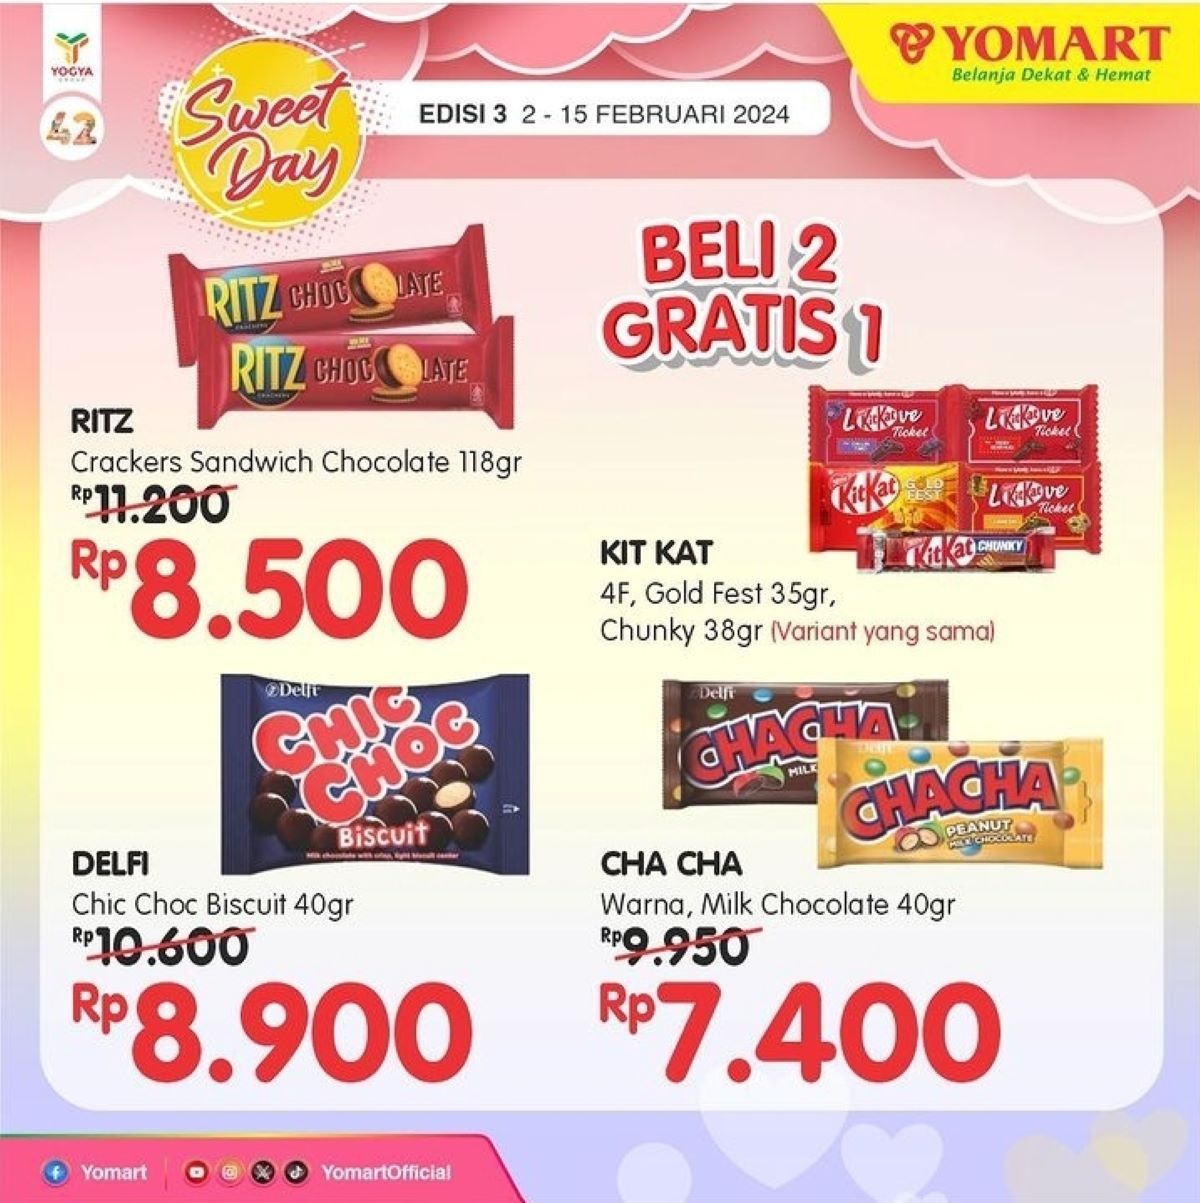 PROMO Yomart: Sweet Day. Ada harga spesial beberapa produk cokelat./instagram @yomartofficial 